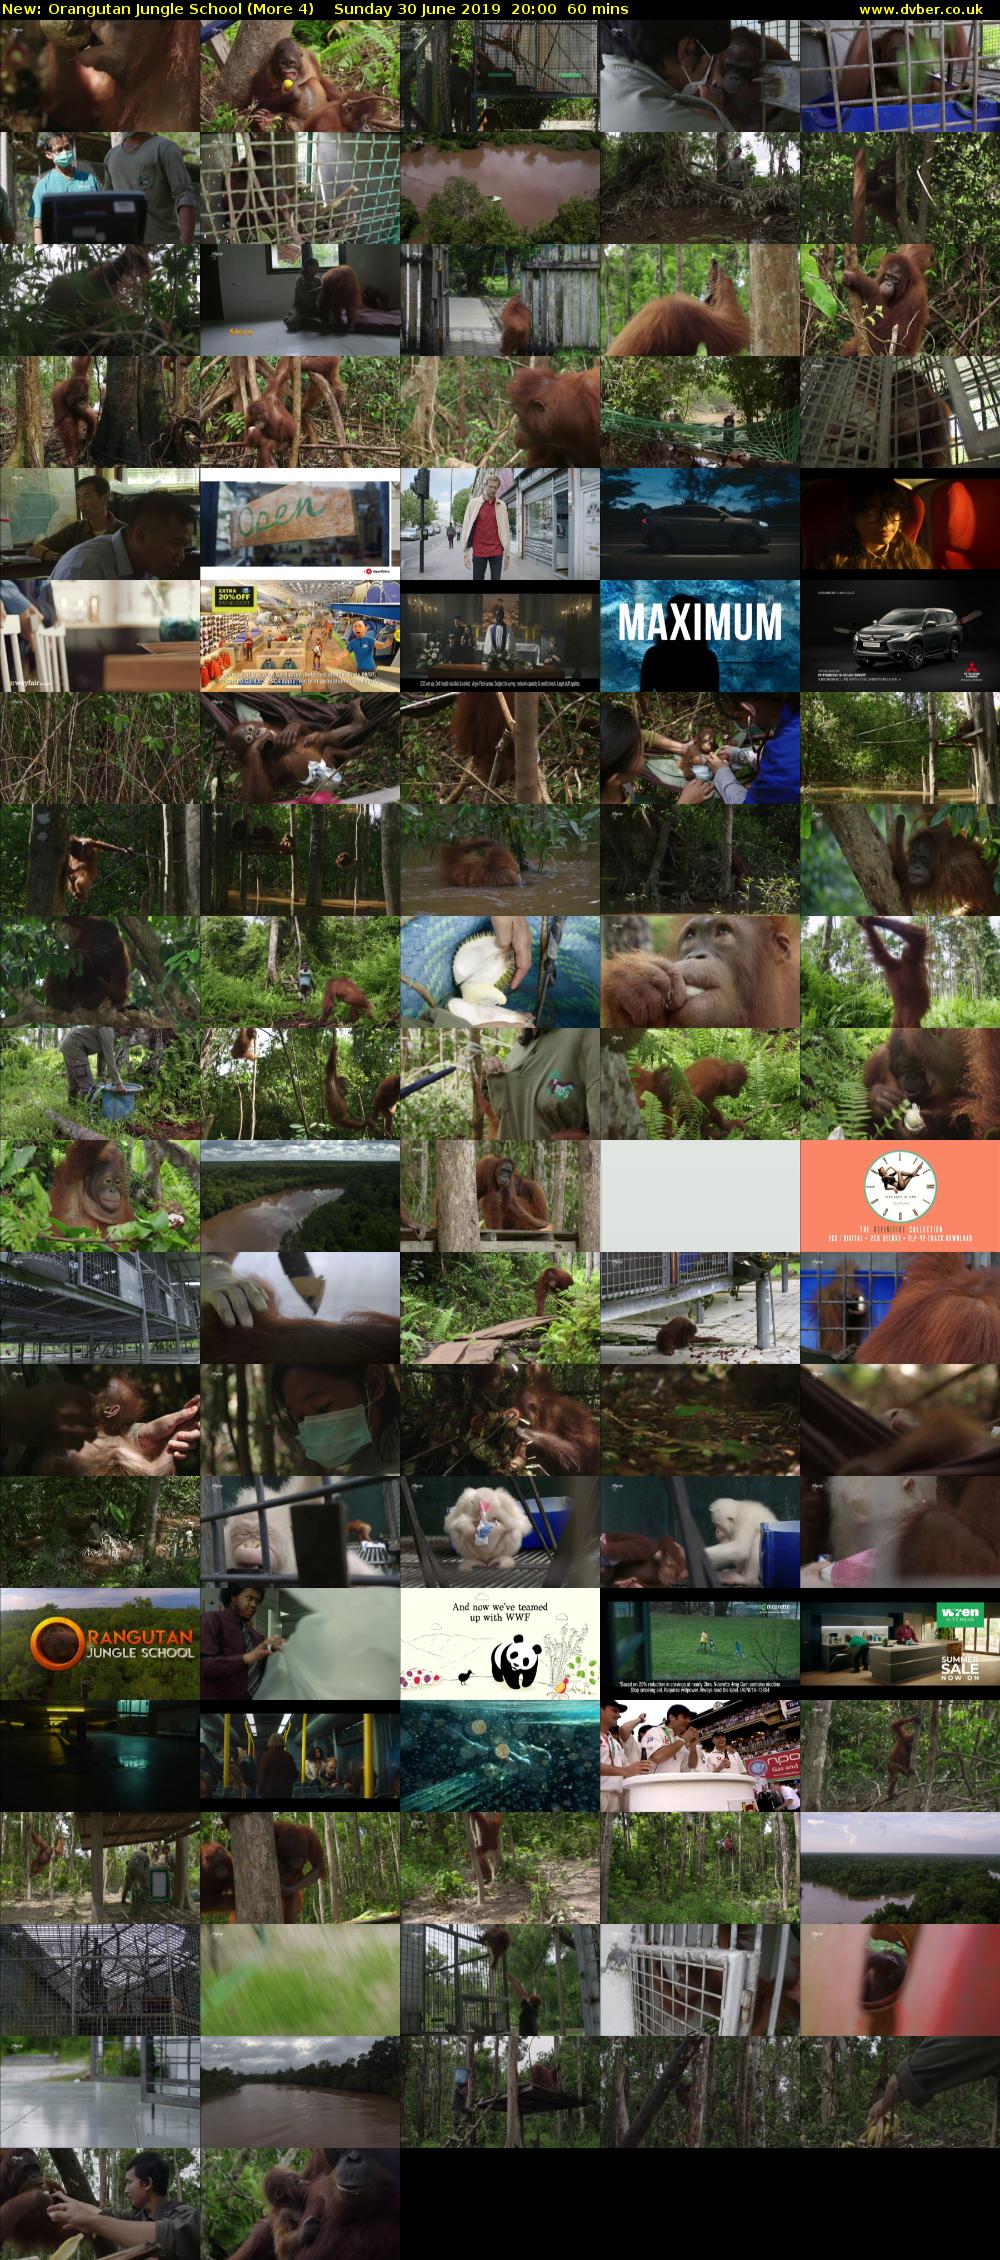 Orangutan Jungle School (More 4) Sunday 30 June 2019 20:00 - 21:00